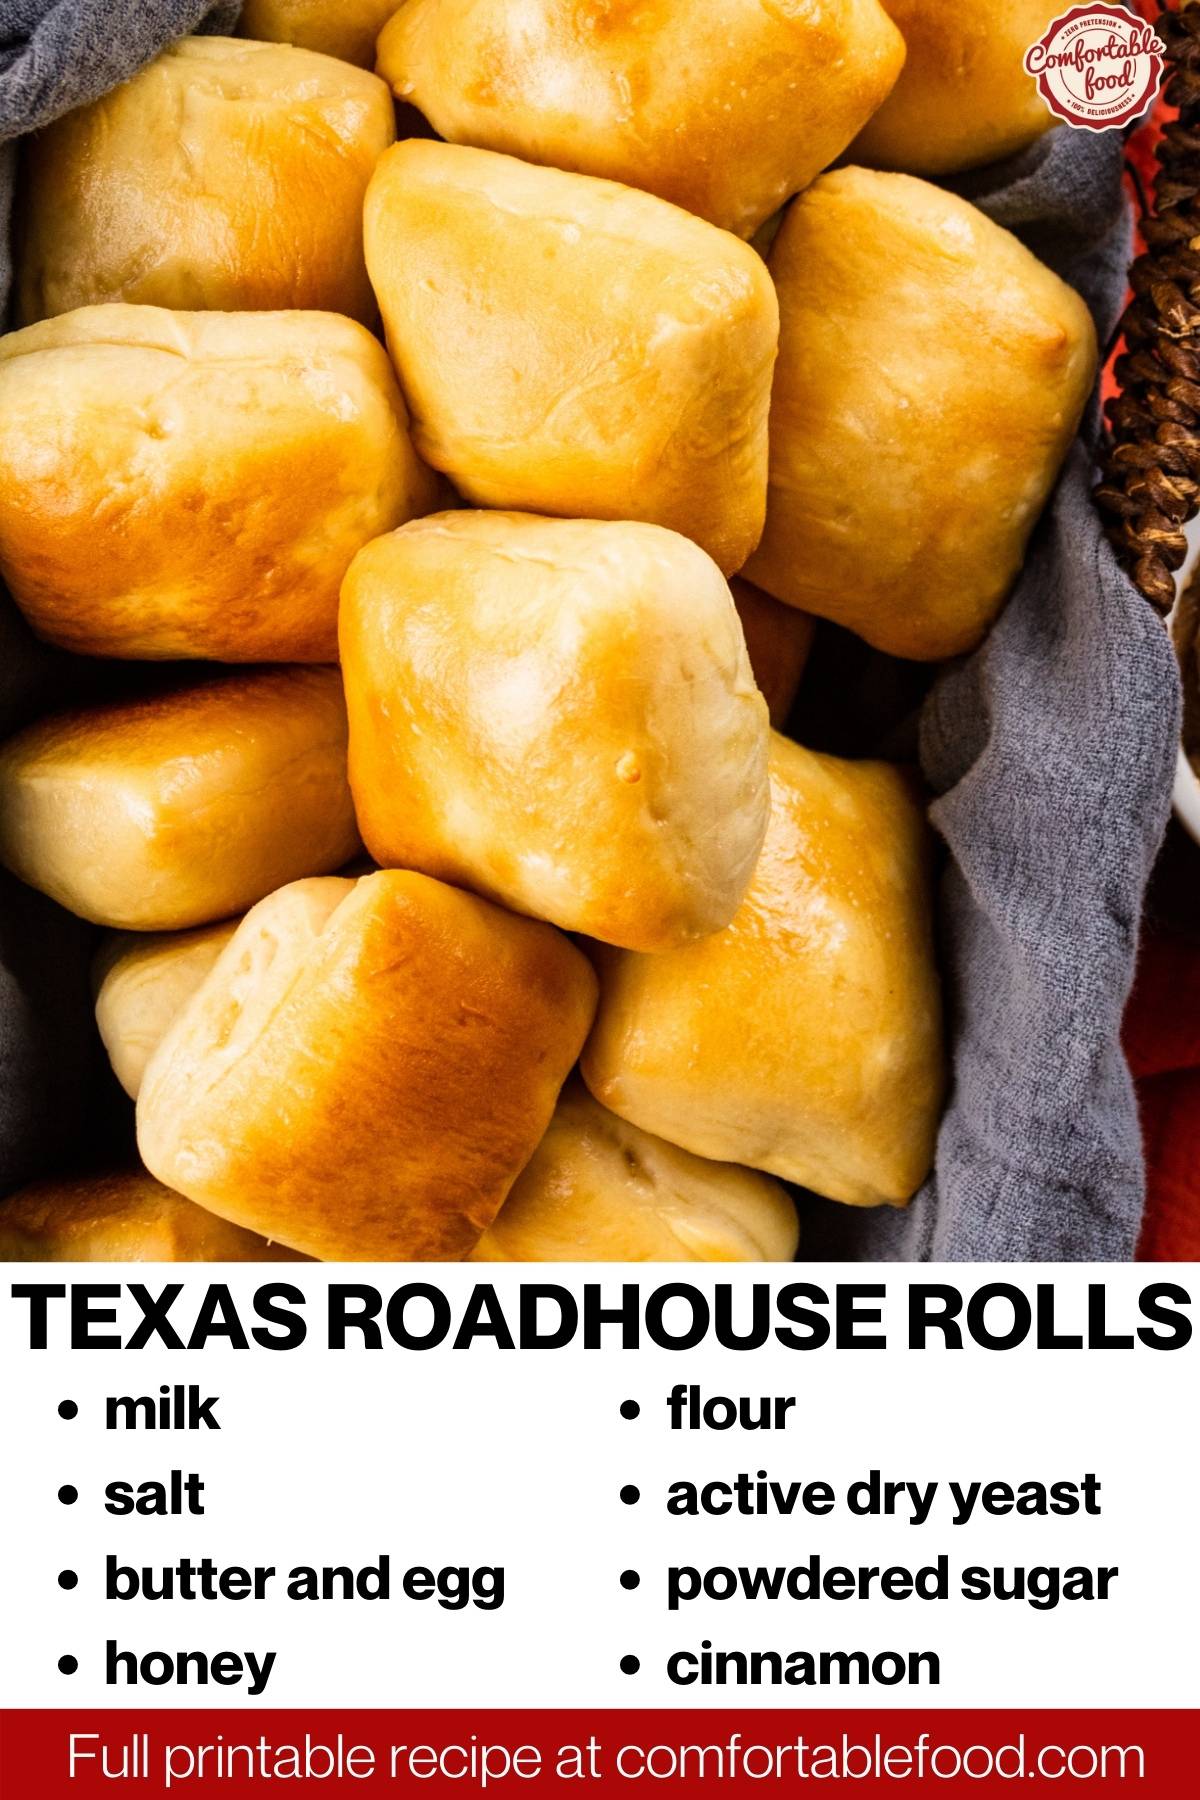 Texas roadhouse rolls socials